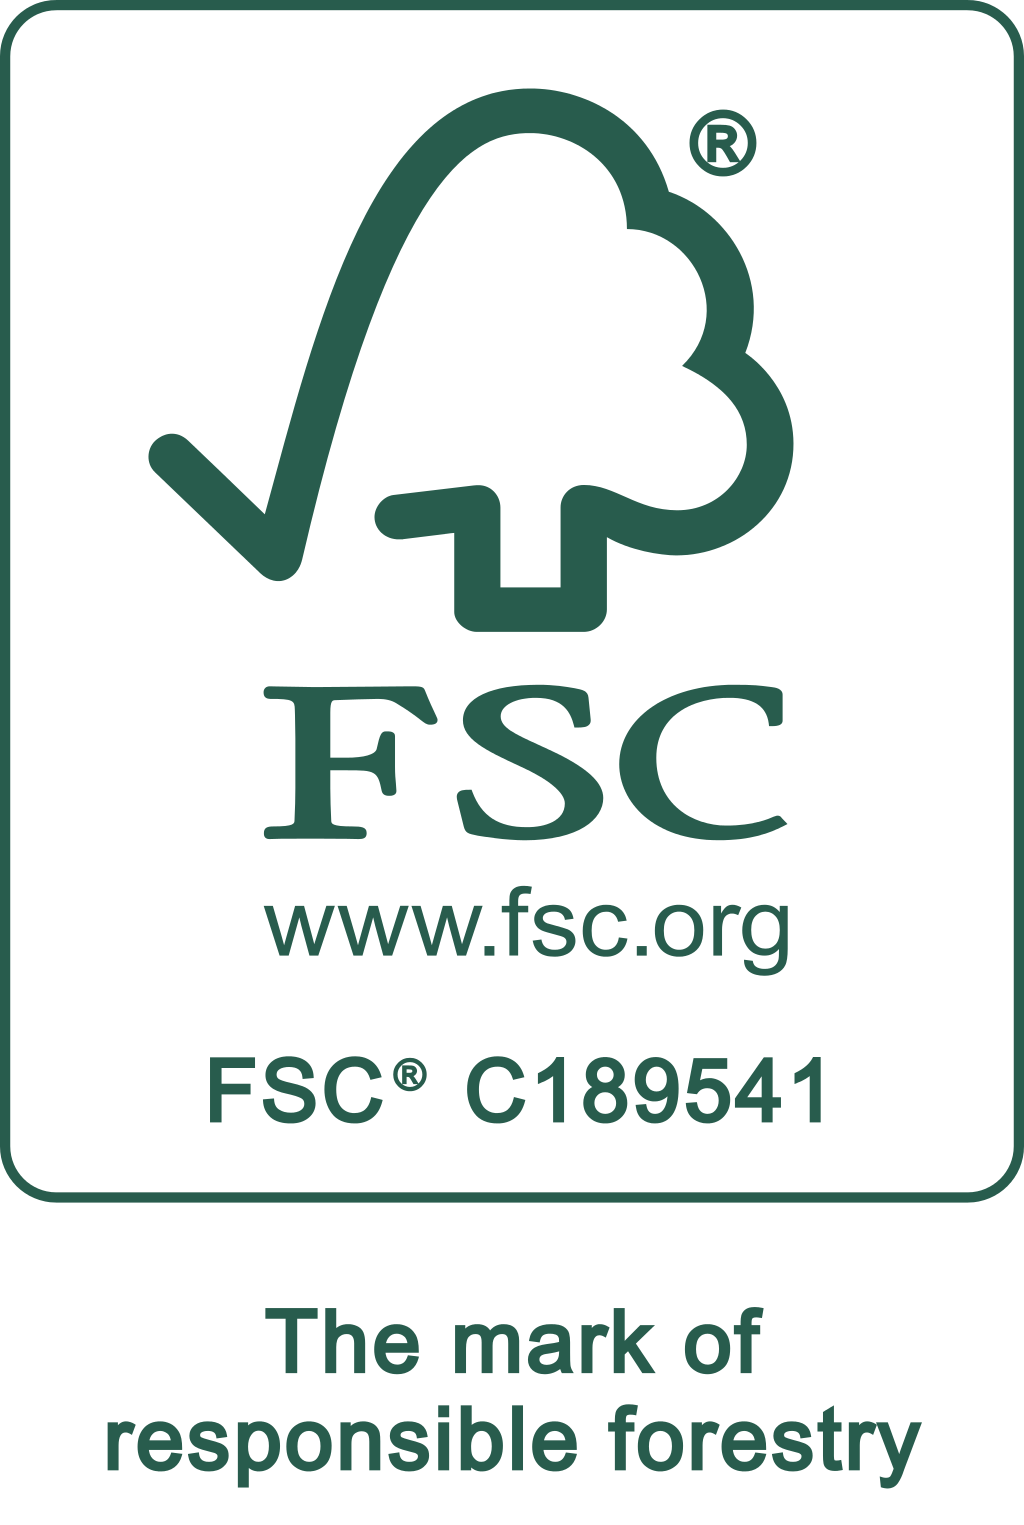 Įmonei suteiktas prestižinis FSC® sertifikatas